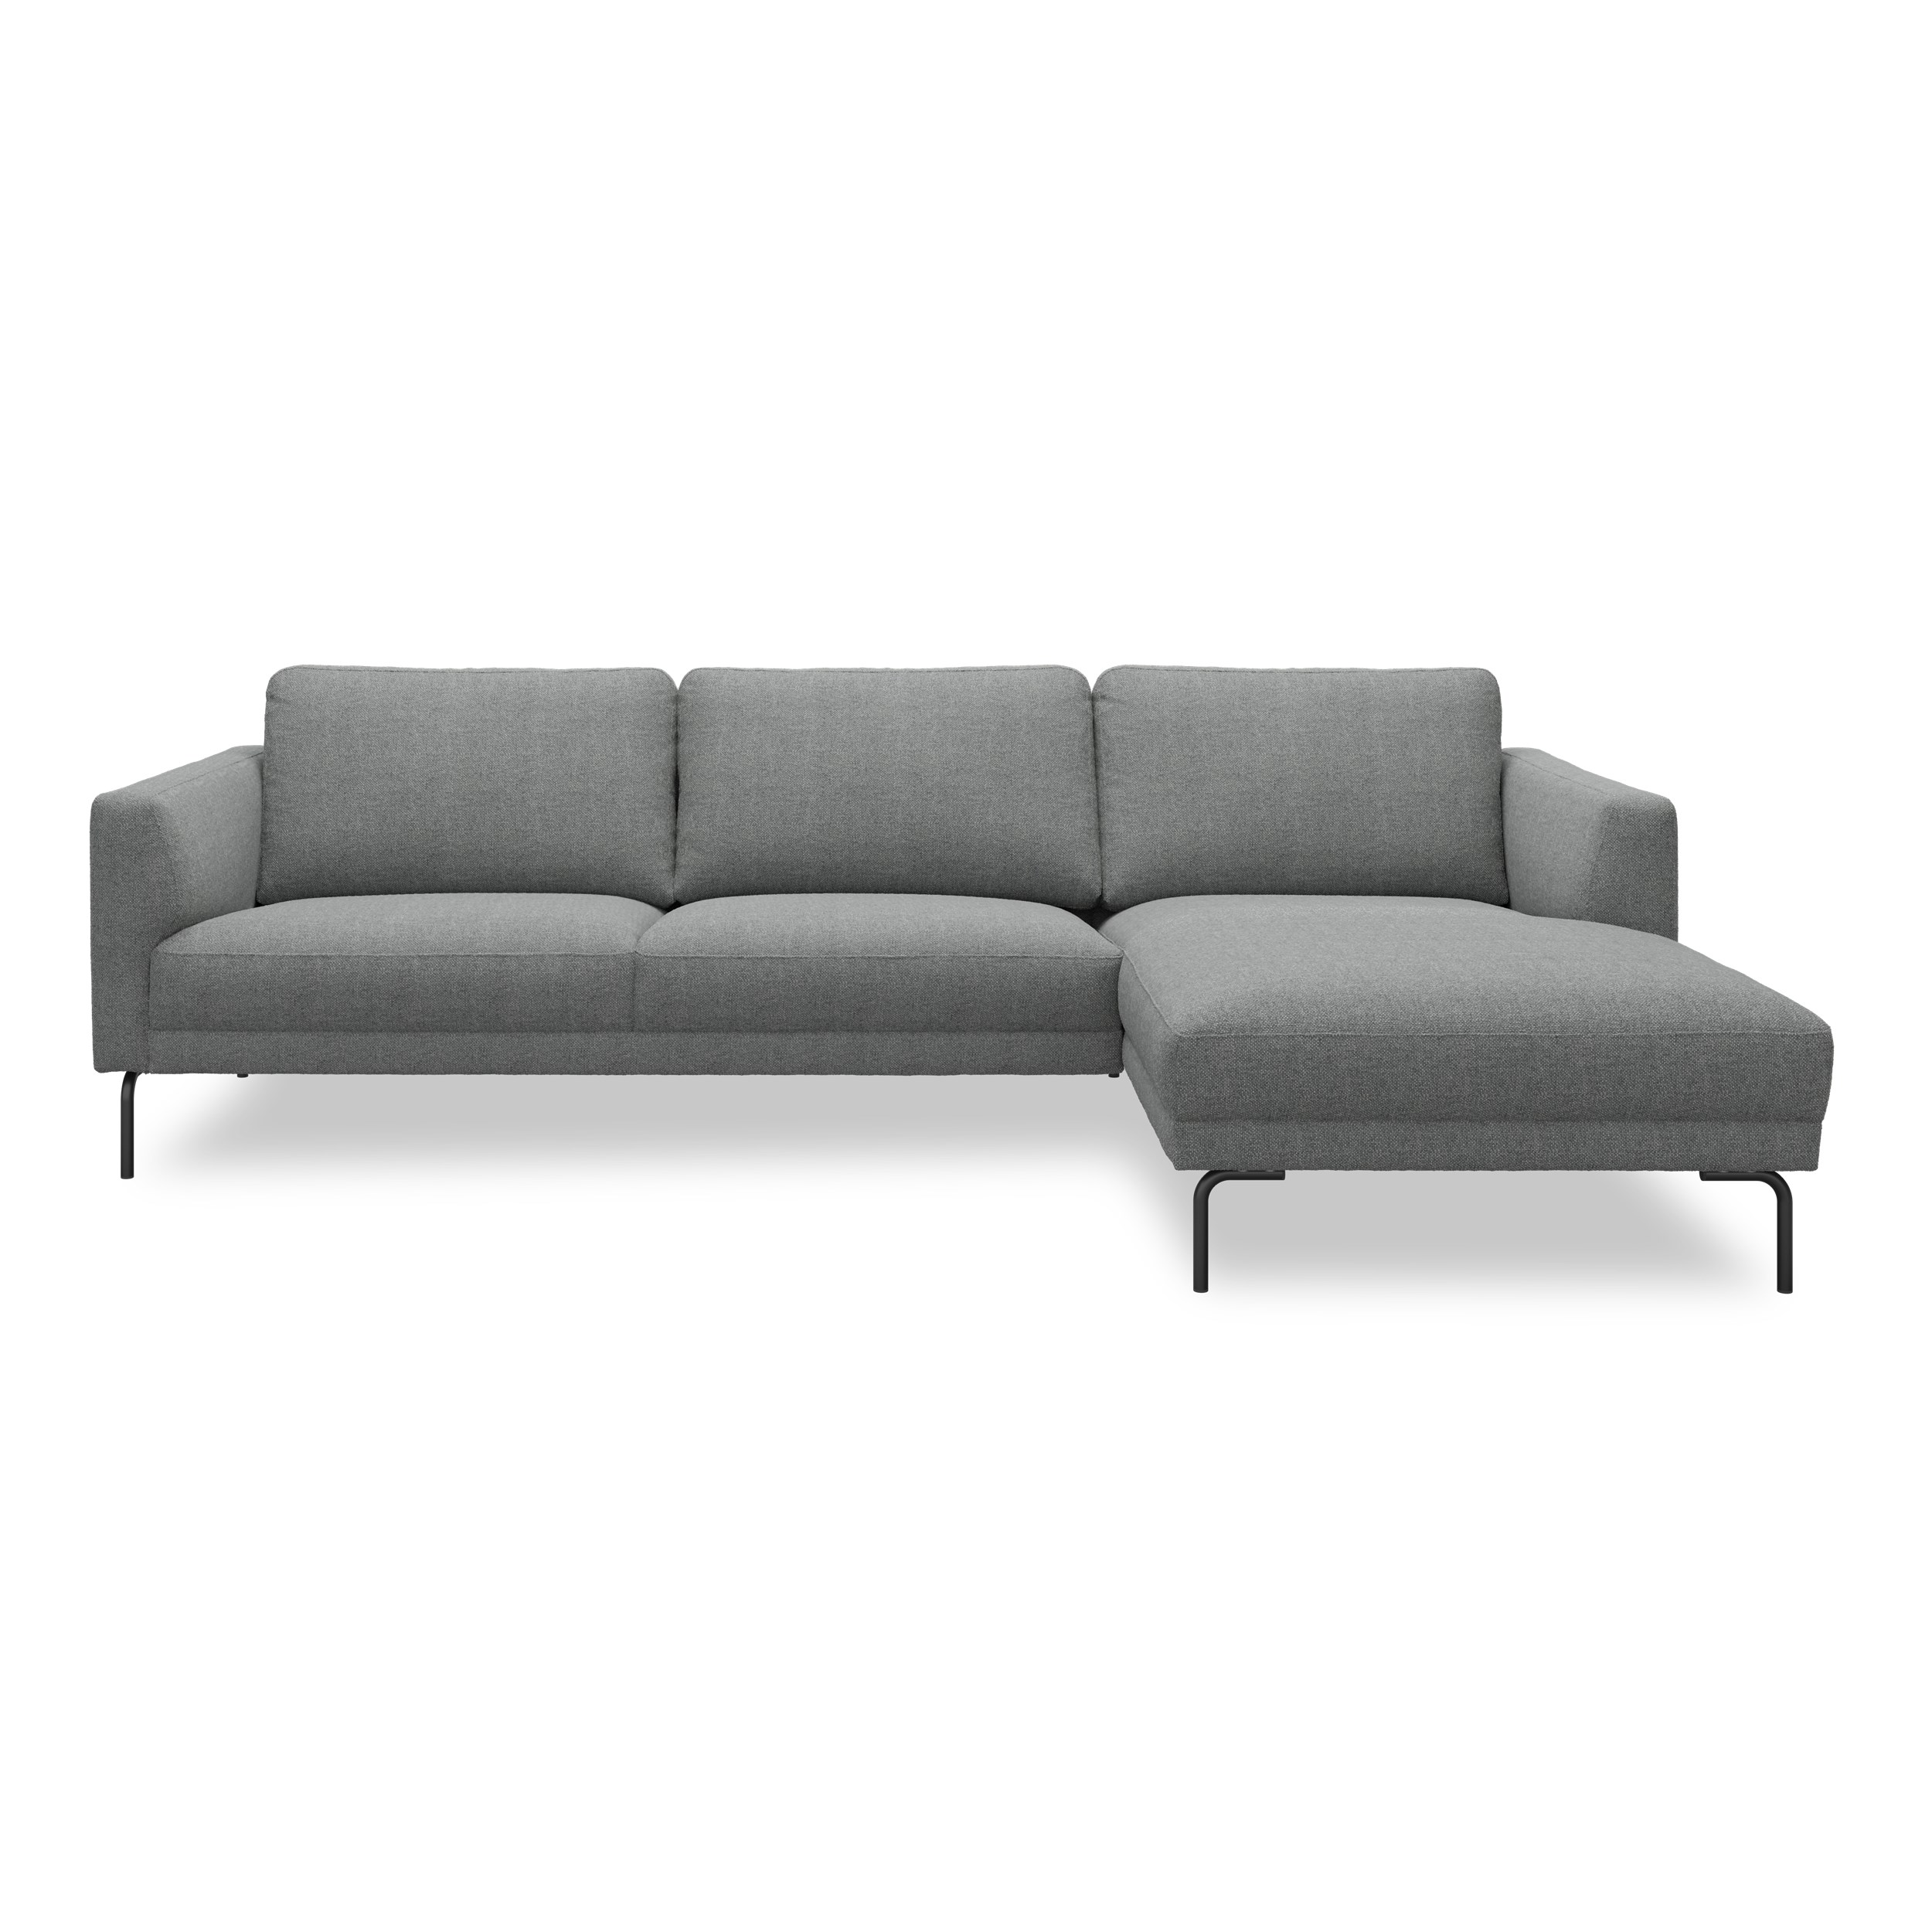 Springfield Sofa med chaiselong - Rate 167 Zinc stof og ben i sort metal